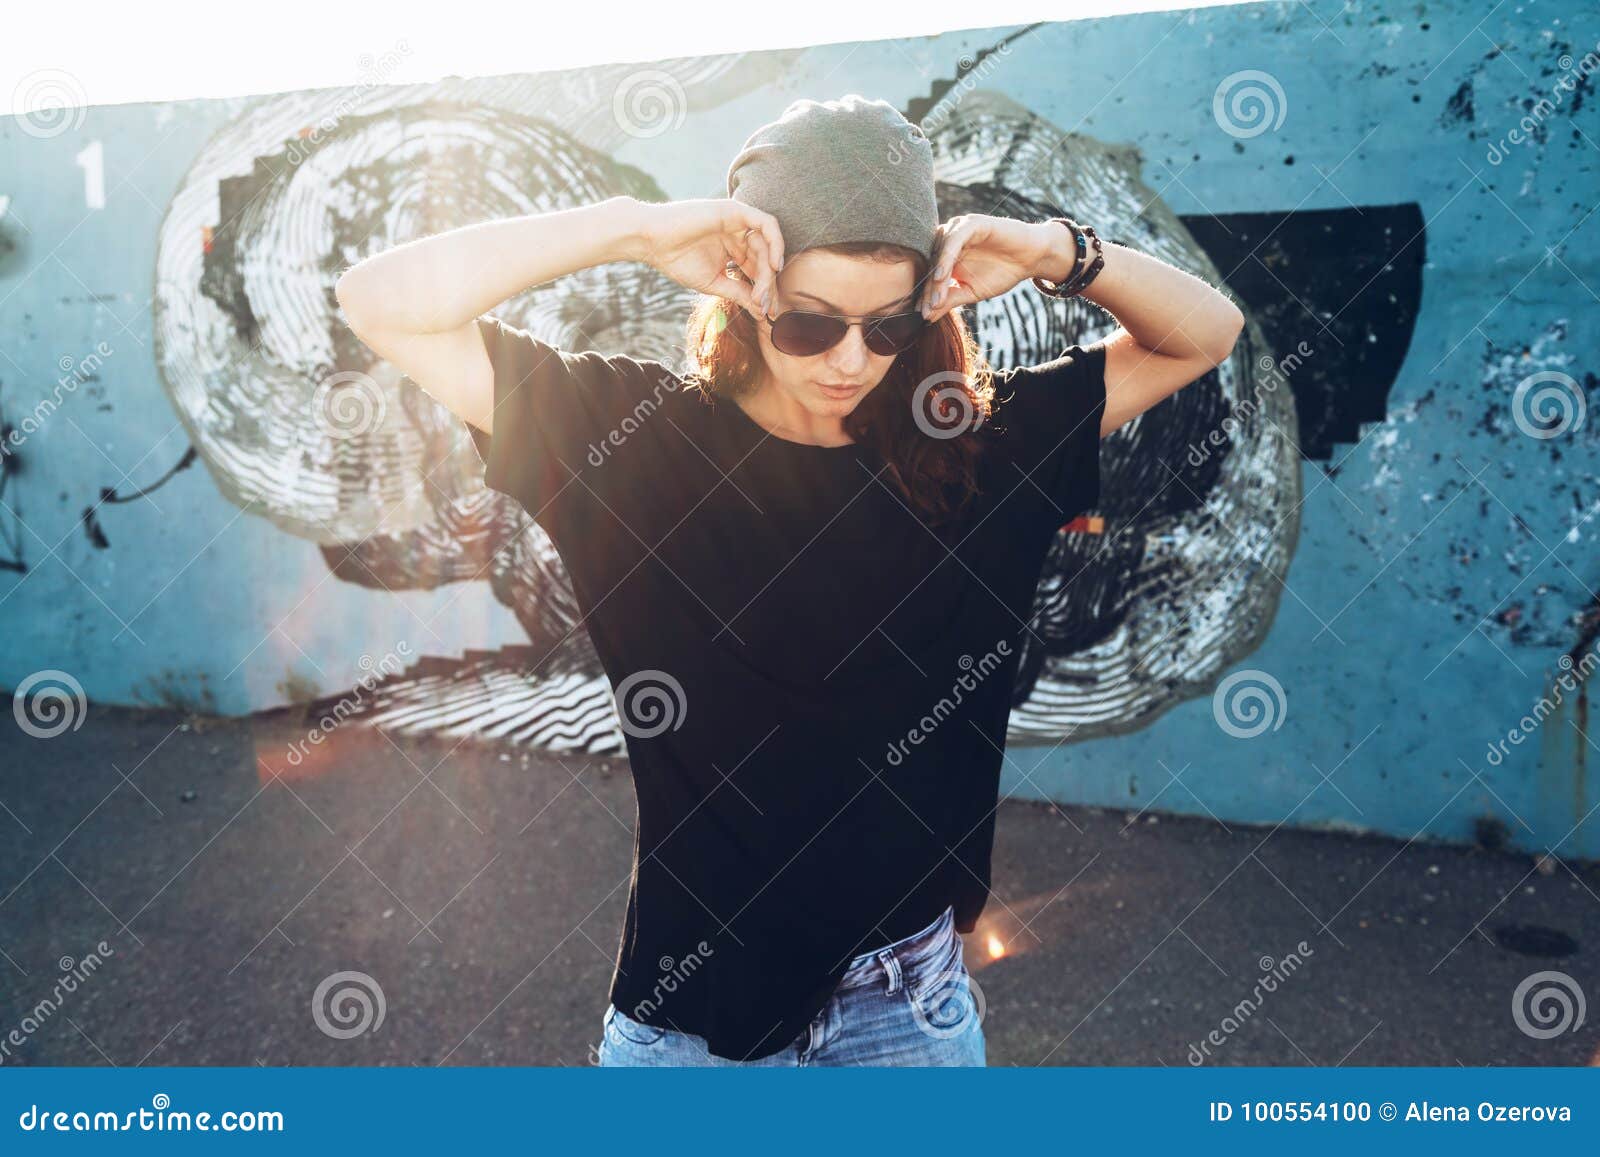 model wearing plain tshirt and sunglasses posing over street wall